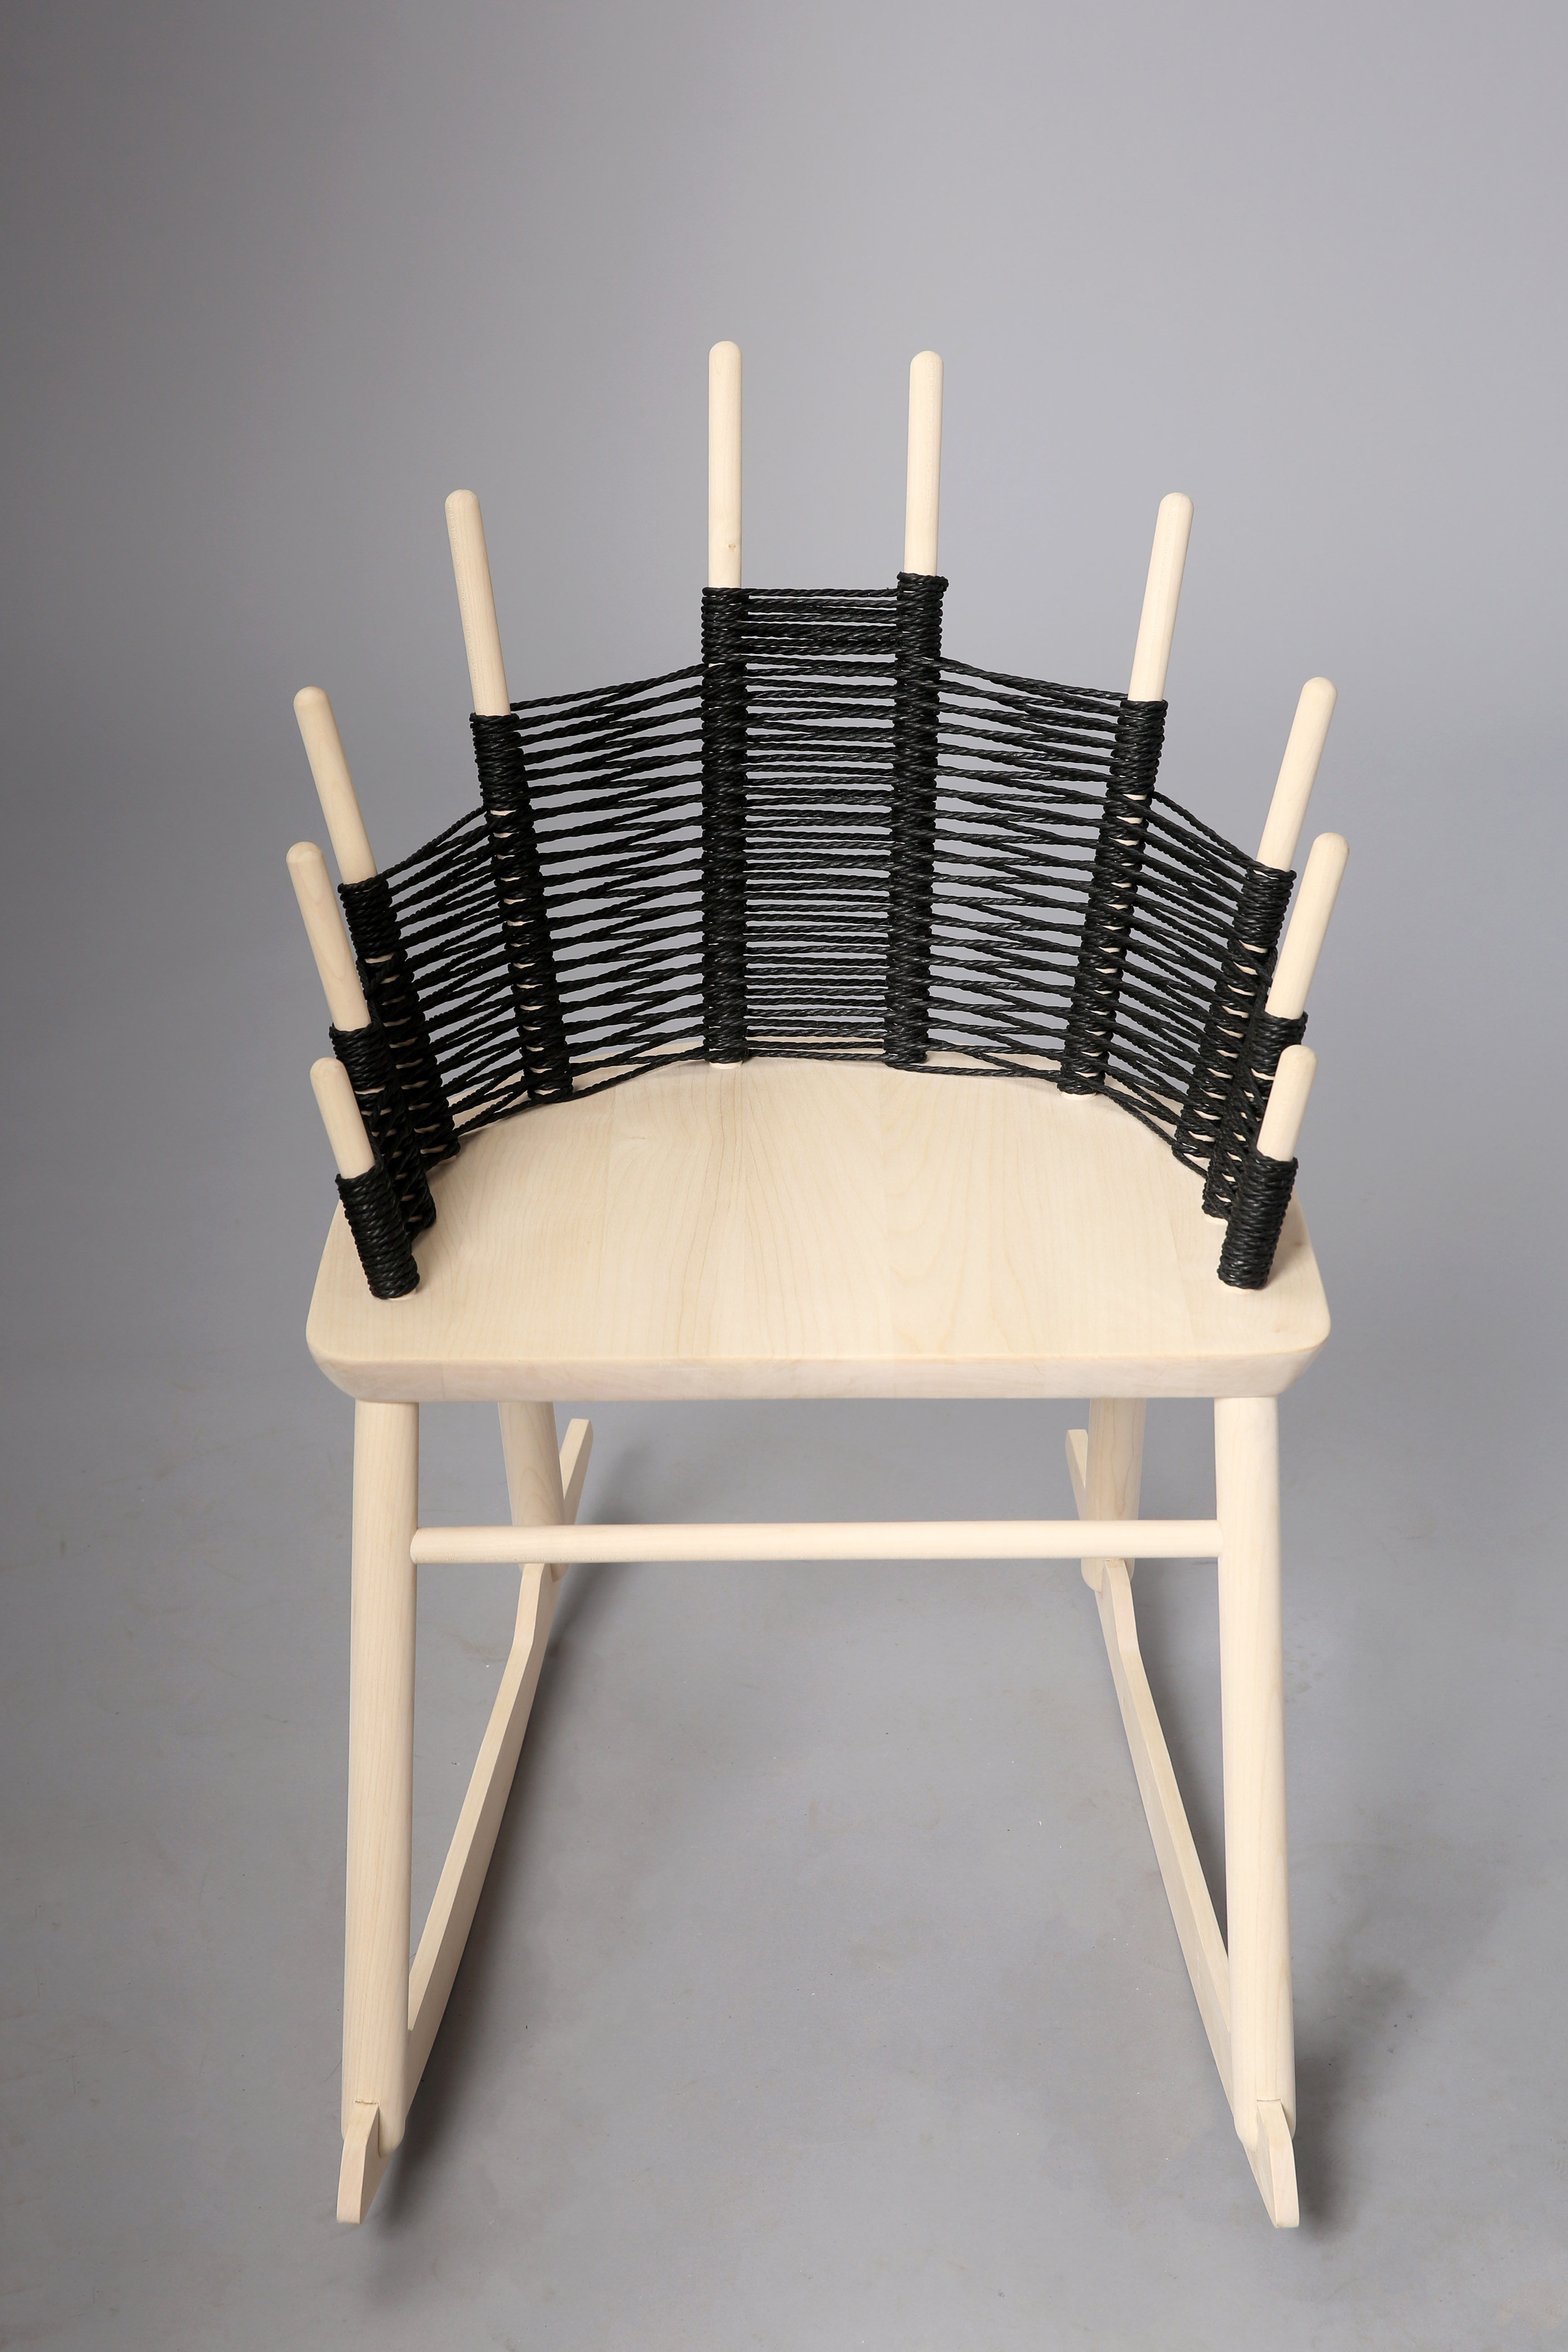 Rook Rocking Chair by Michael Regan